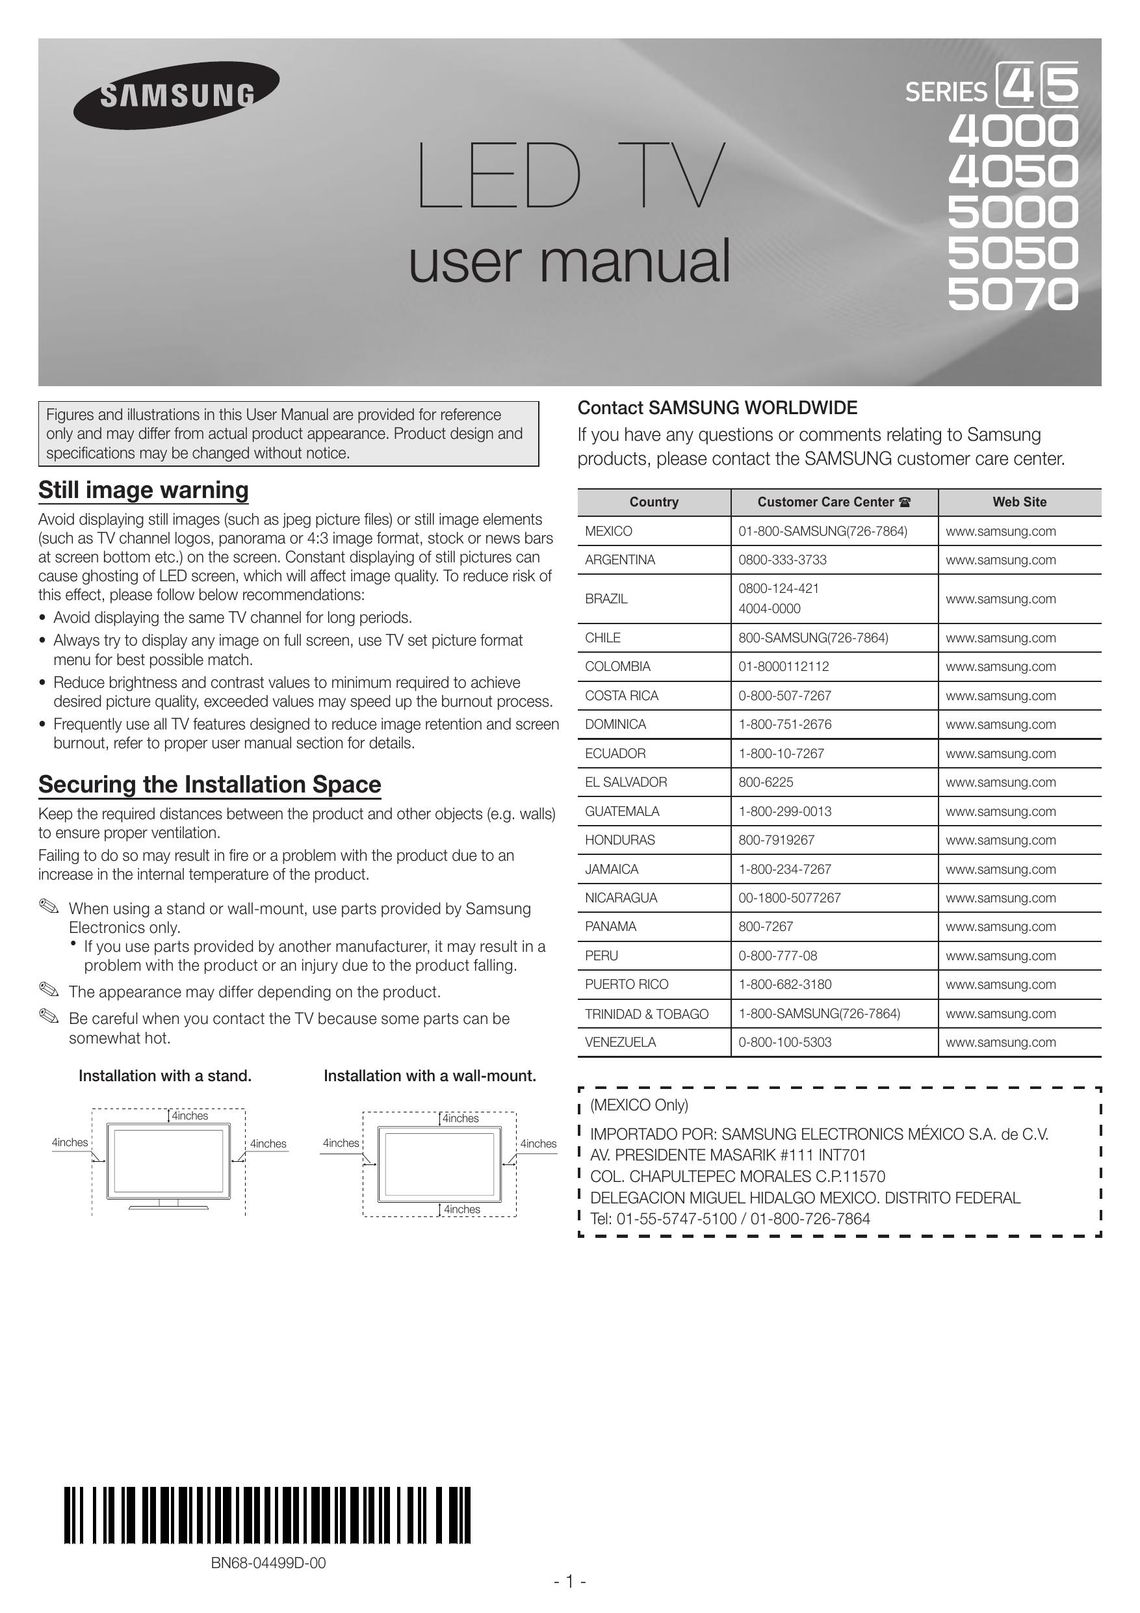 Samsung 5000 Model Vehicle User Manual